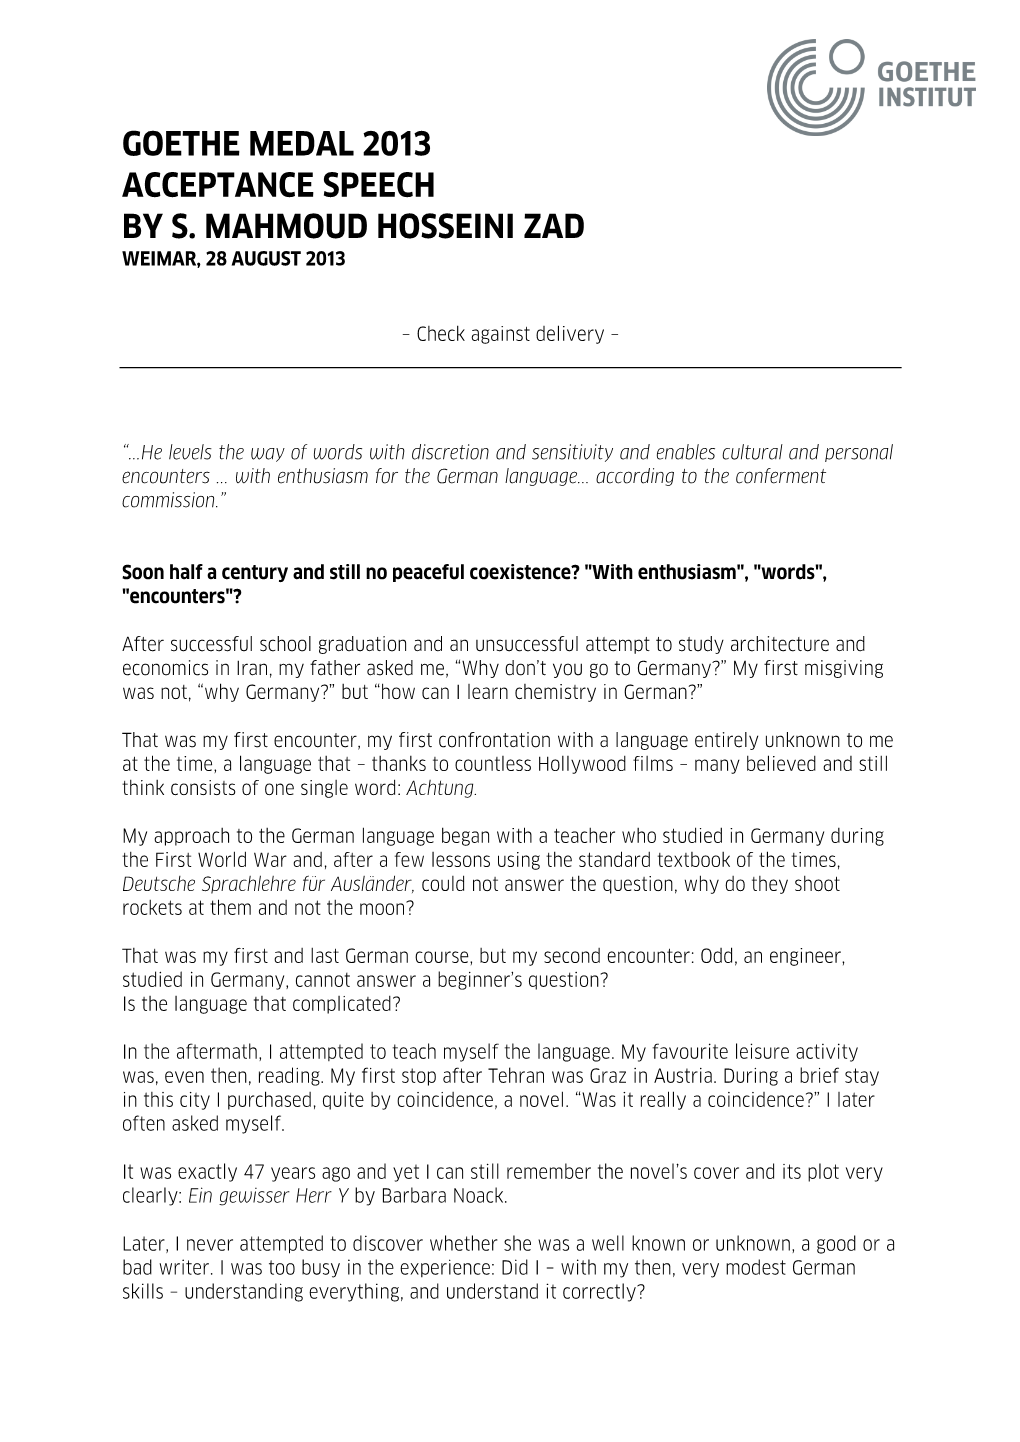 Acceptance Speech by S. Mahmoud Hosseini Zad Weimar, 28 August 2013